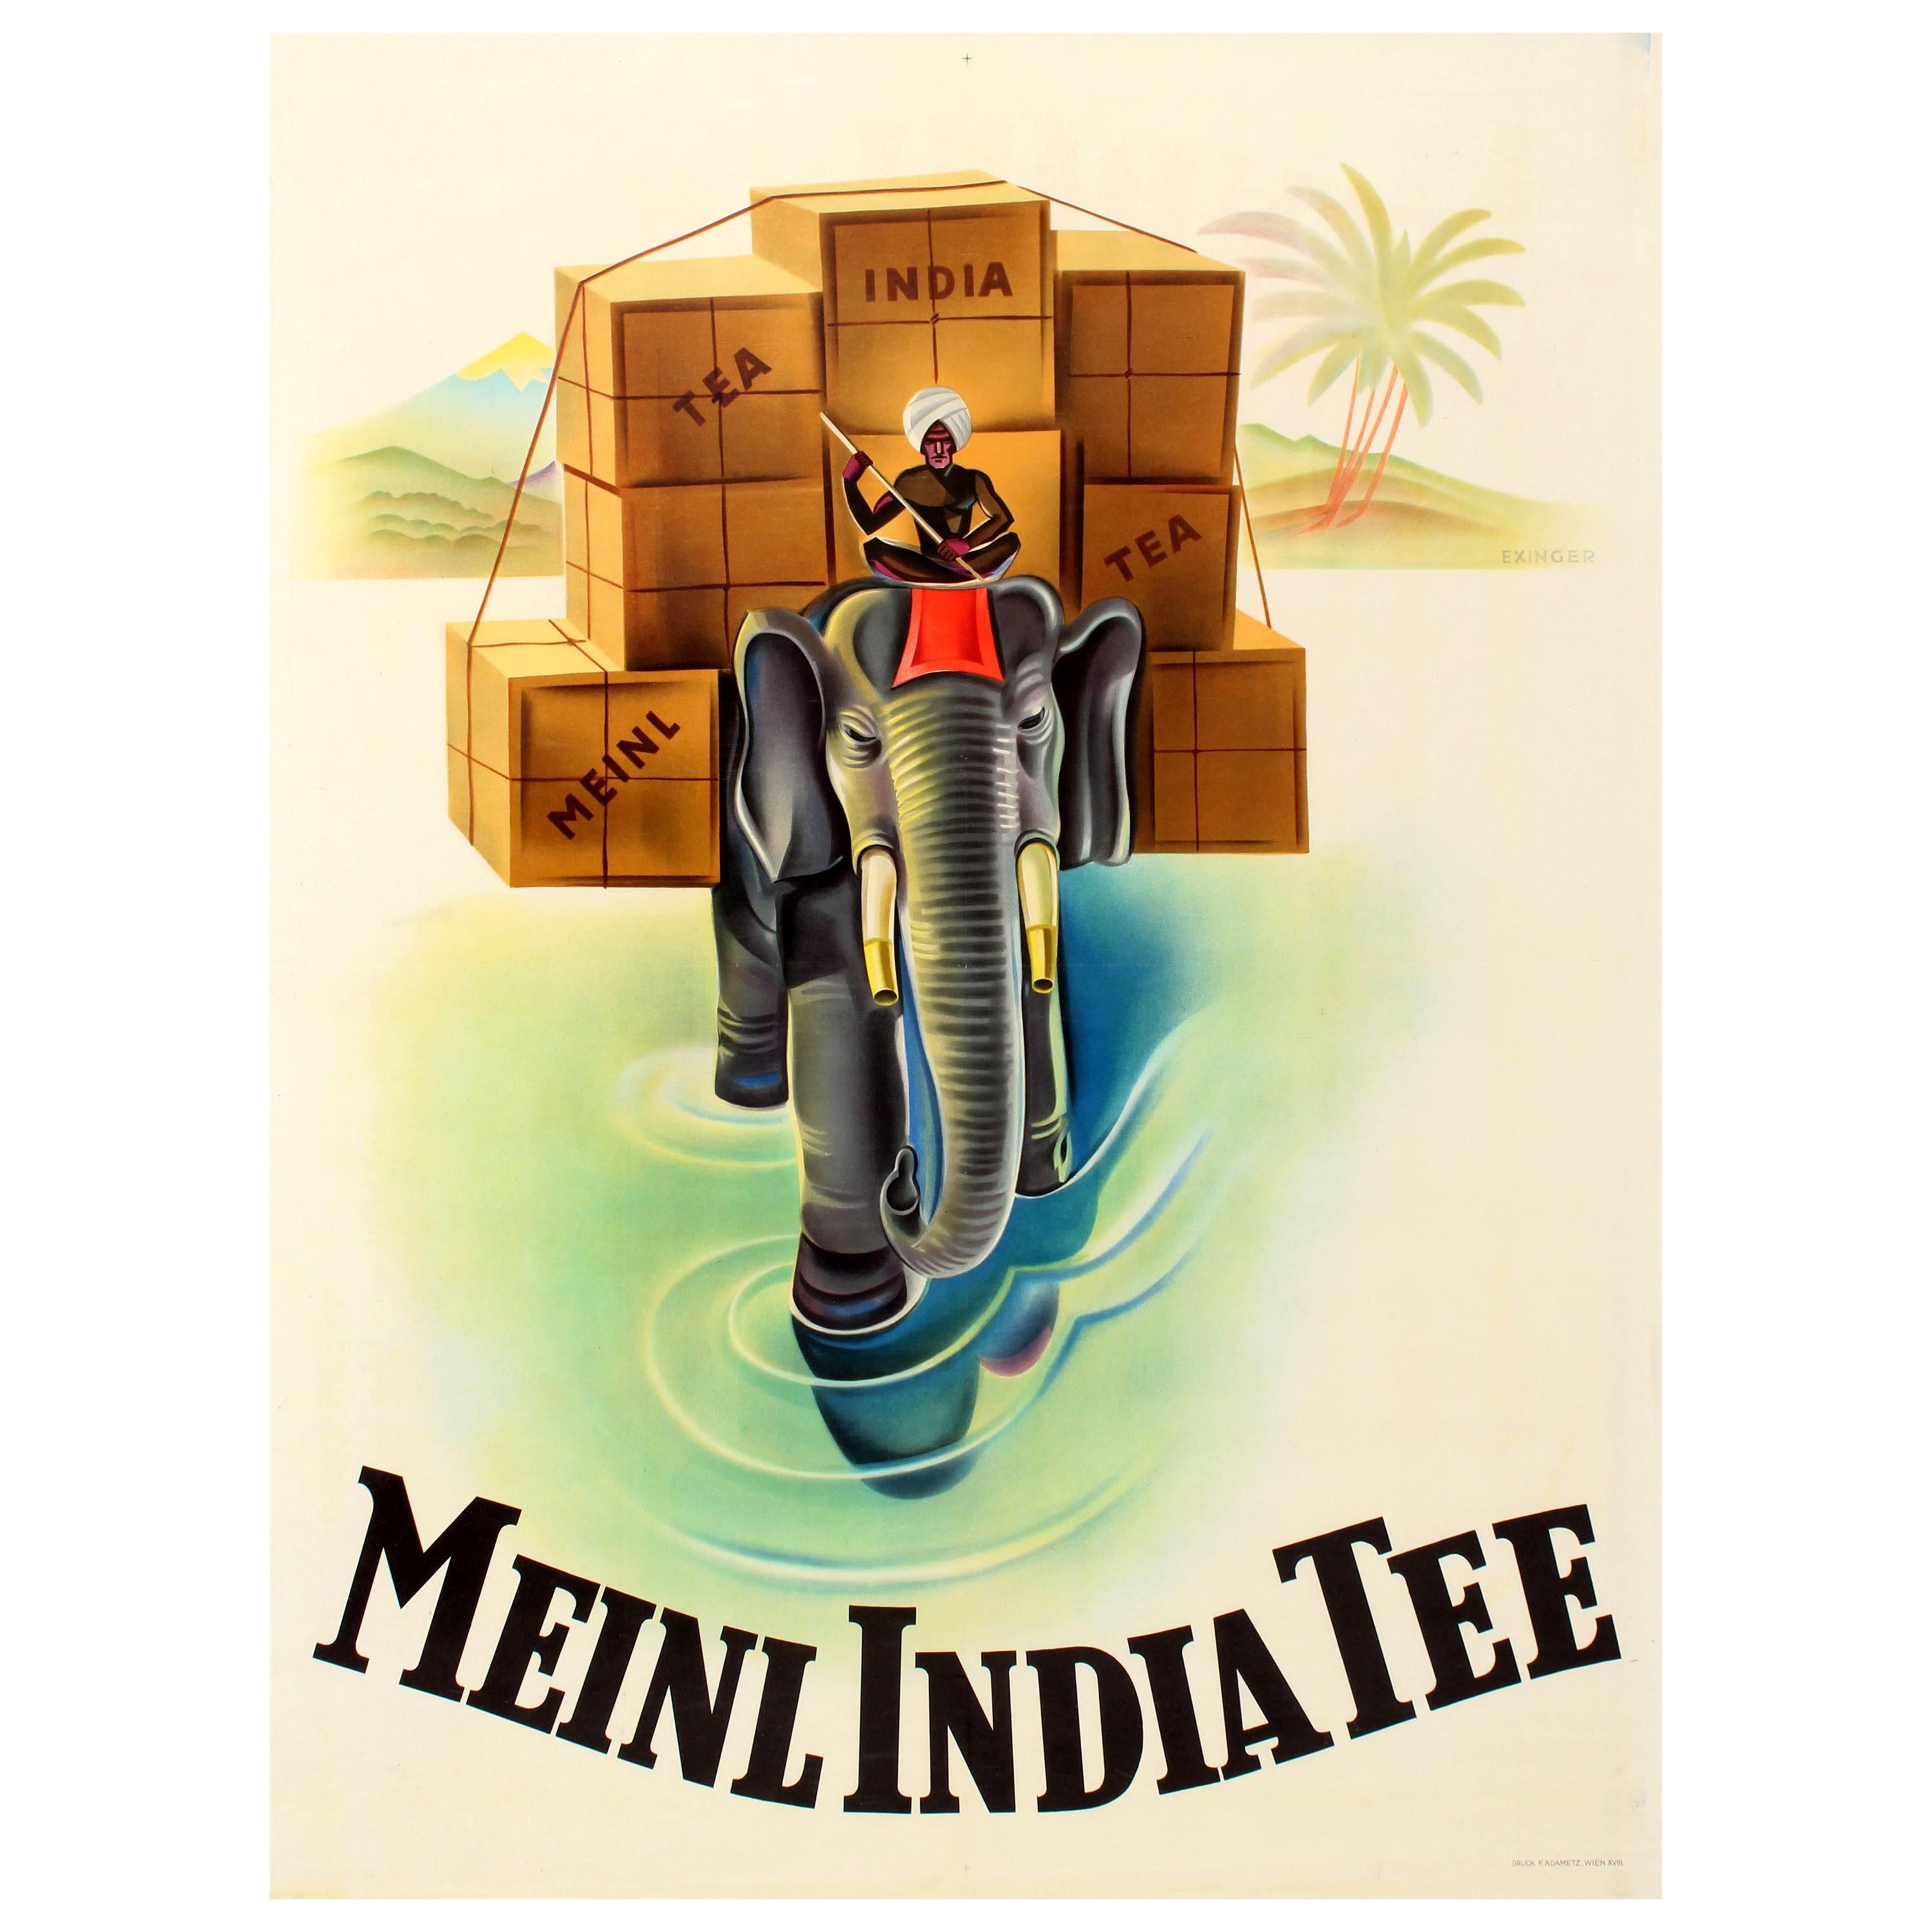 Original Vintage Tea Drink Advertising Poster for Meinl India Tee Ft. Elephant